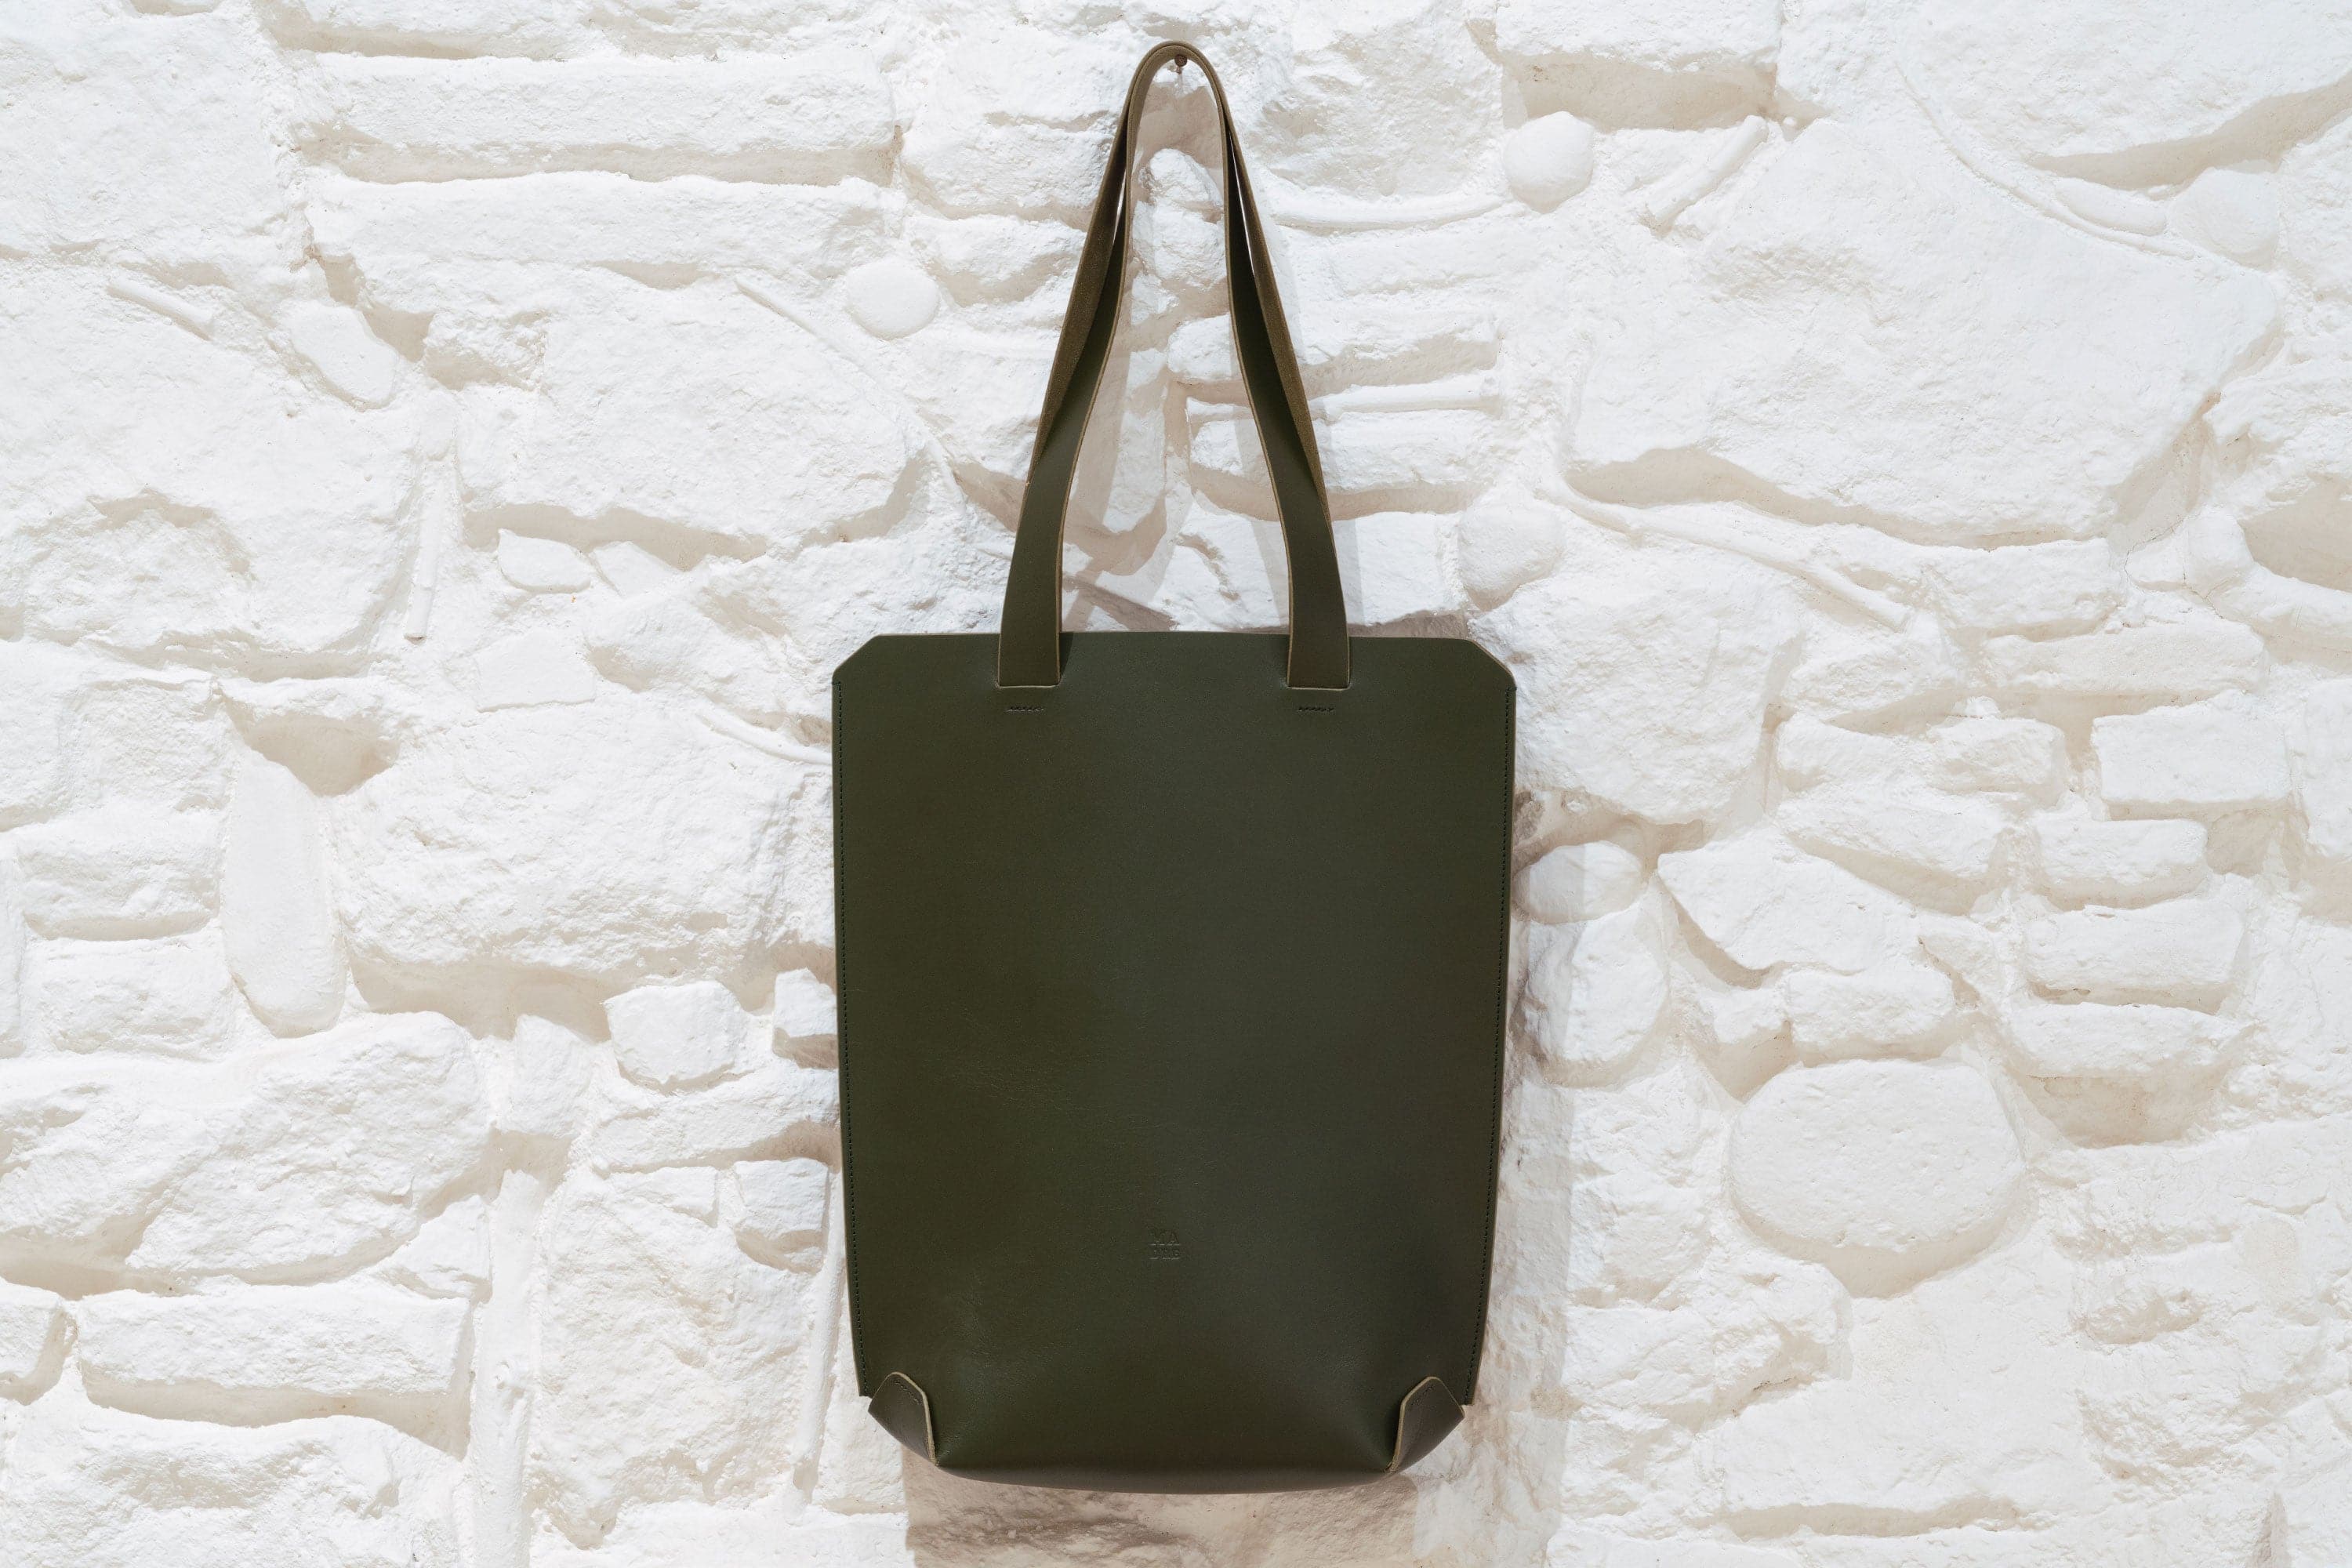 Big Tote Bag Leather Olive Green Minimalism Premium Quality Design By Manuel Dreesmann Atelier Madre Barcelona Spain